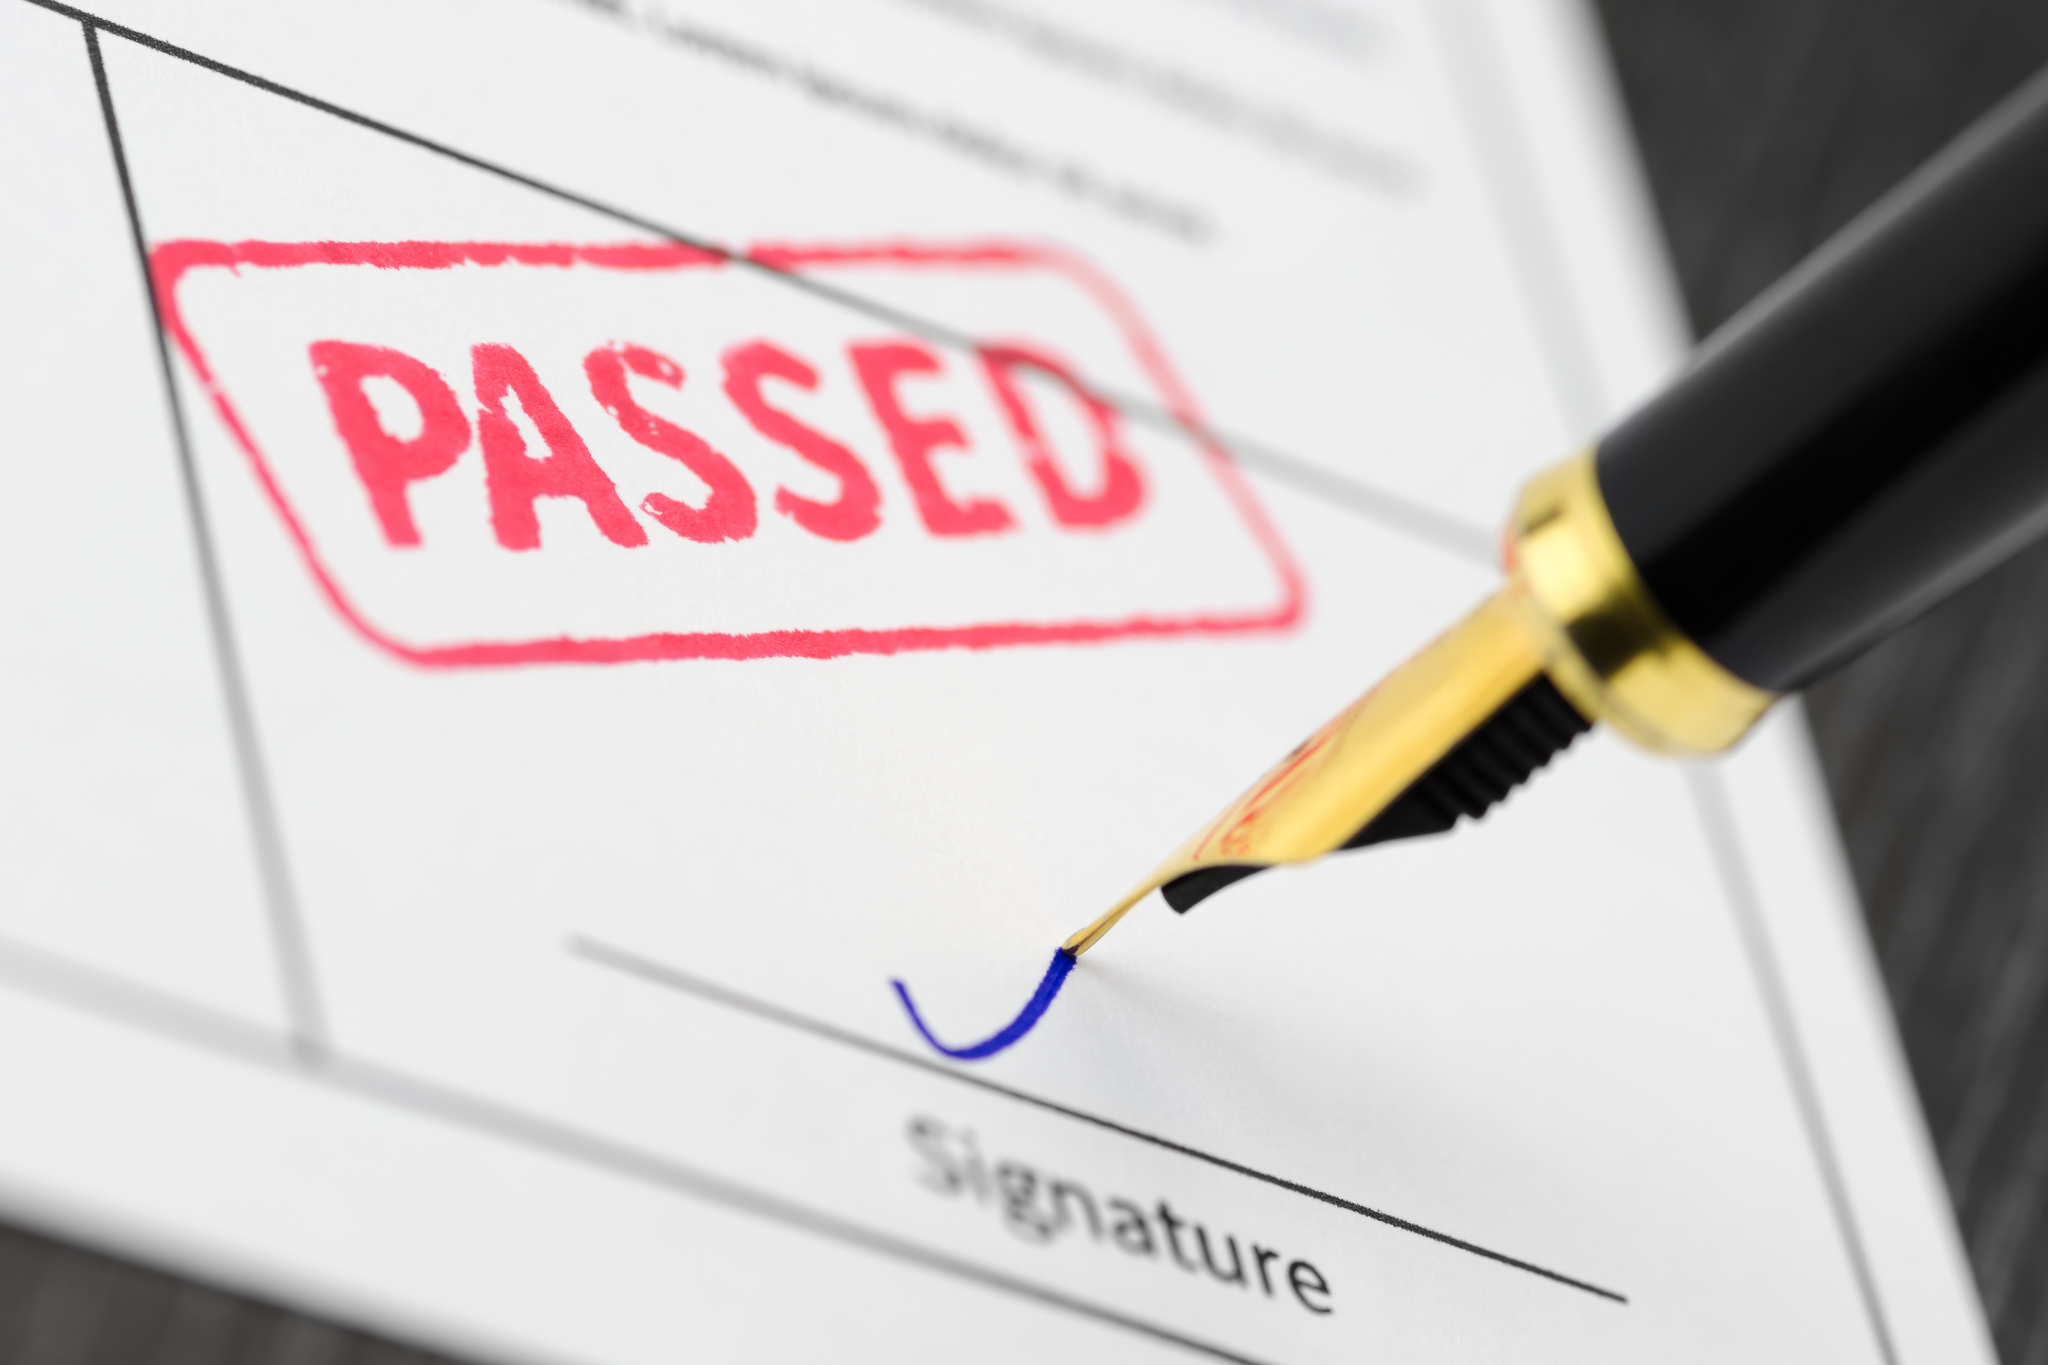 Passed exam for insurance licensing